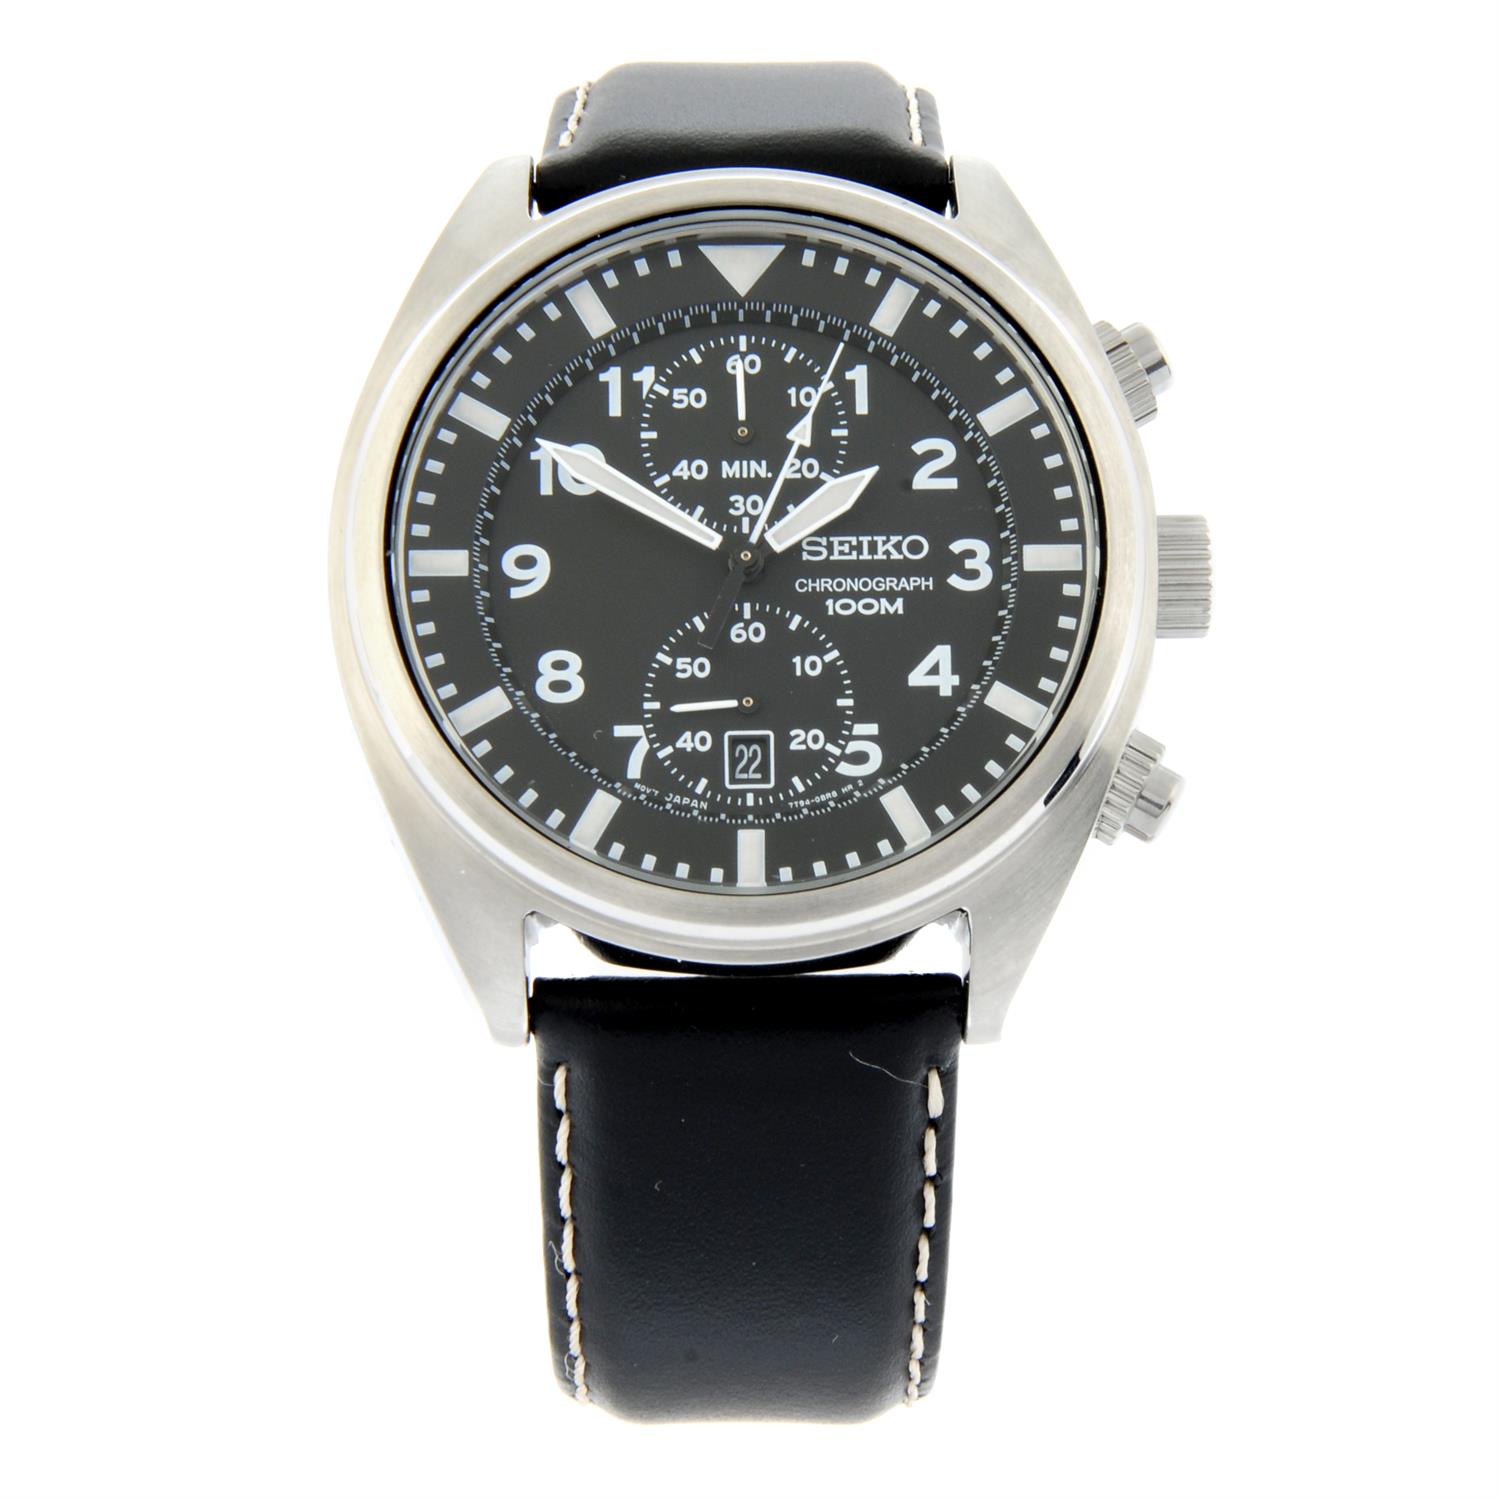 Seiko - a chronograph wrist watch, 42mm.